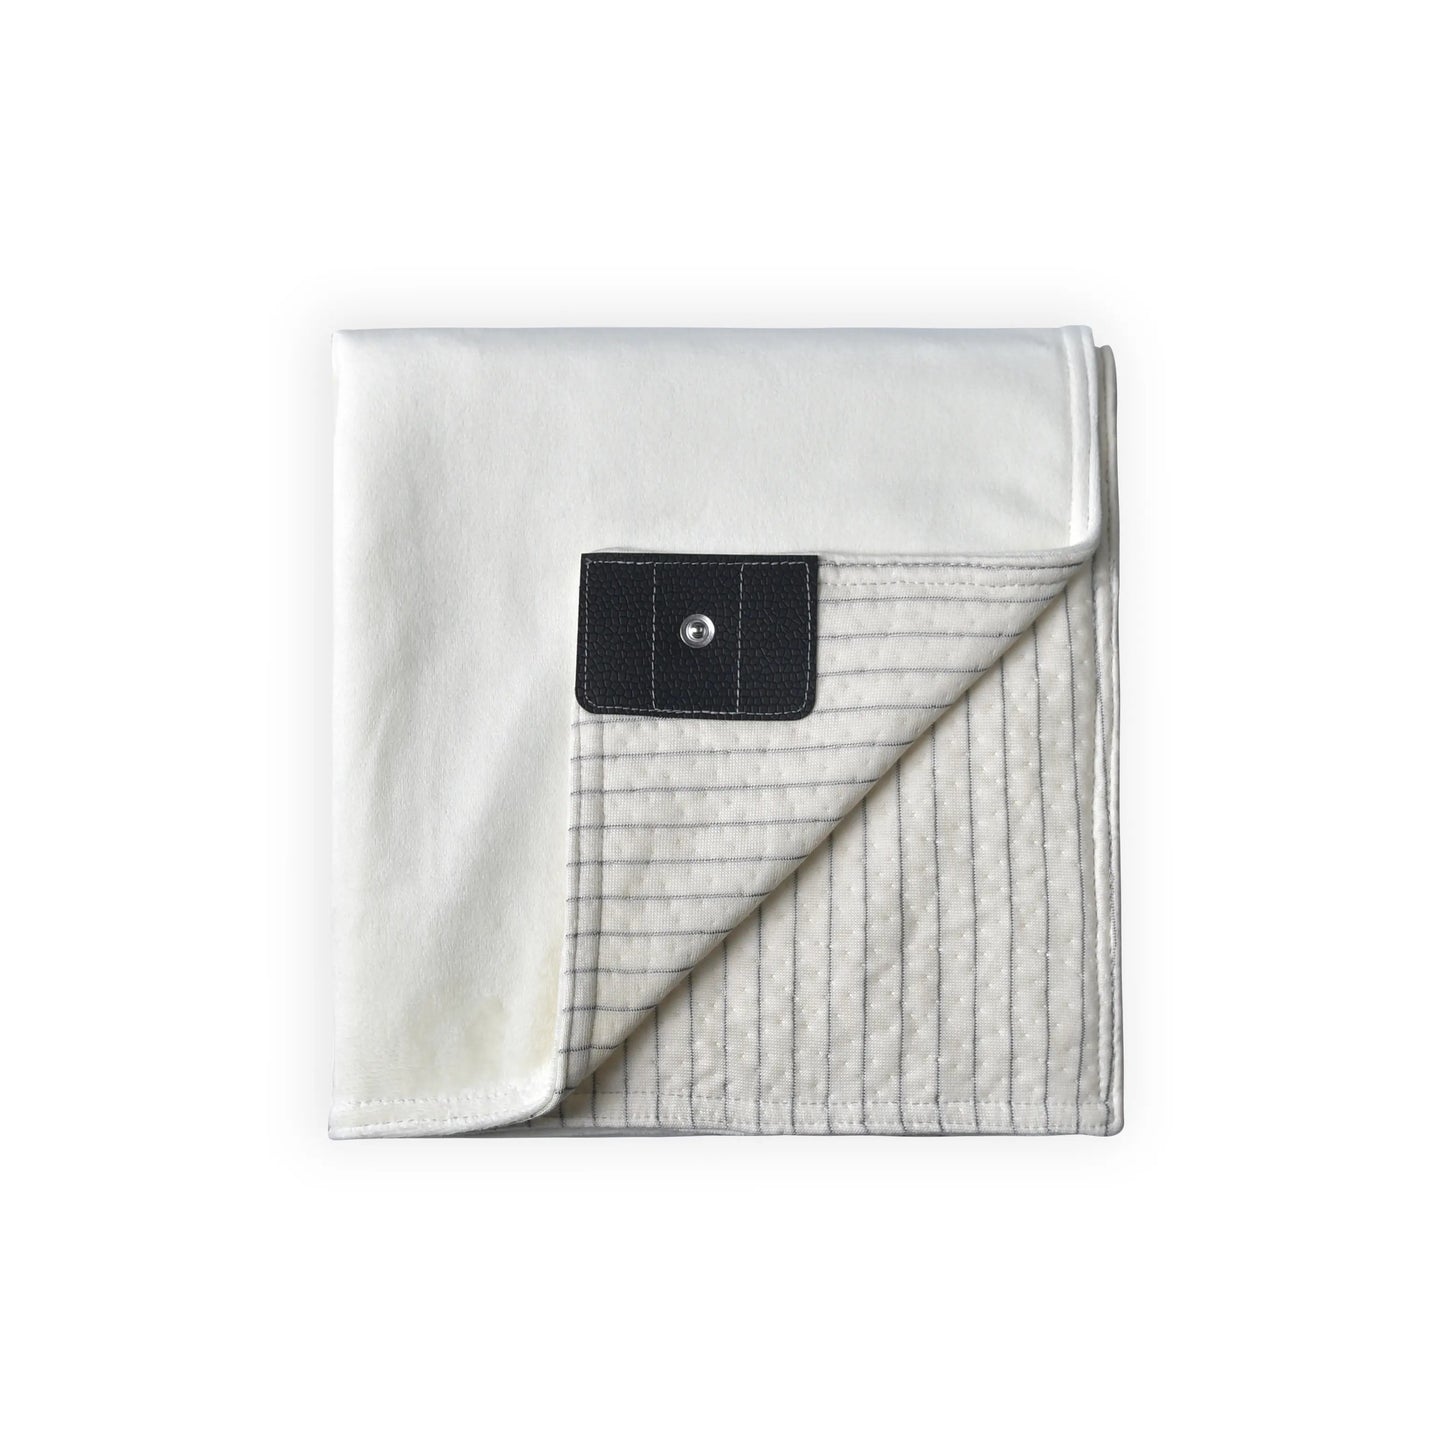 Earthing blanket - Soft and versatile 50cm X 70cm - GroundedKiwi.nz bedblanketchair